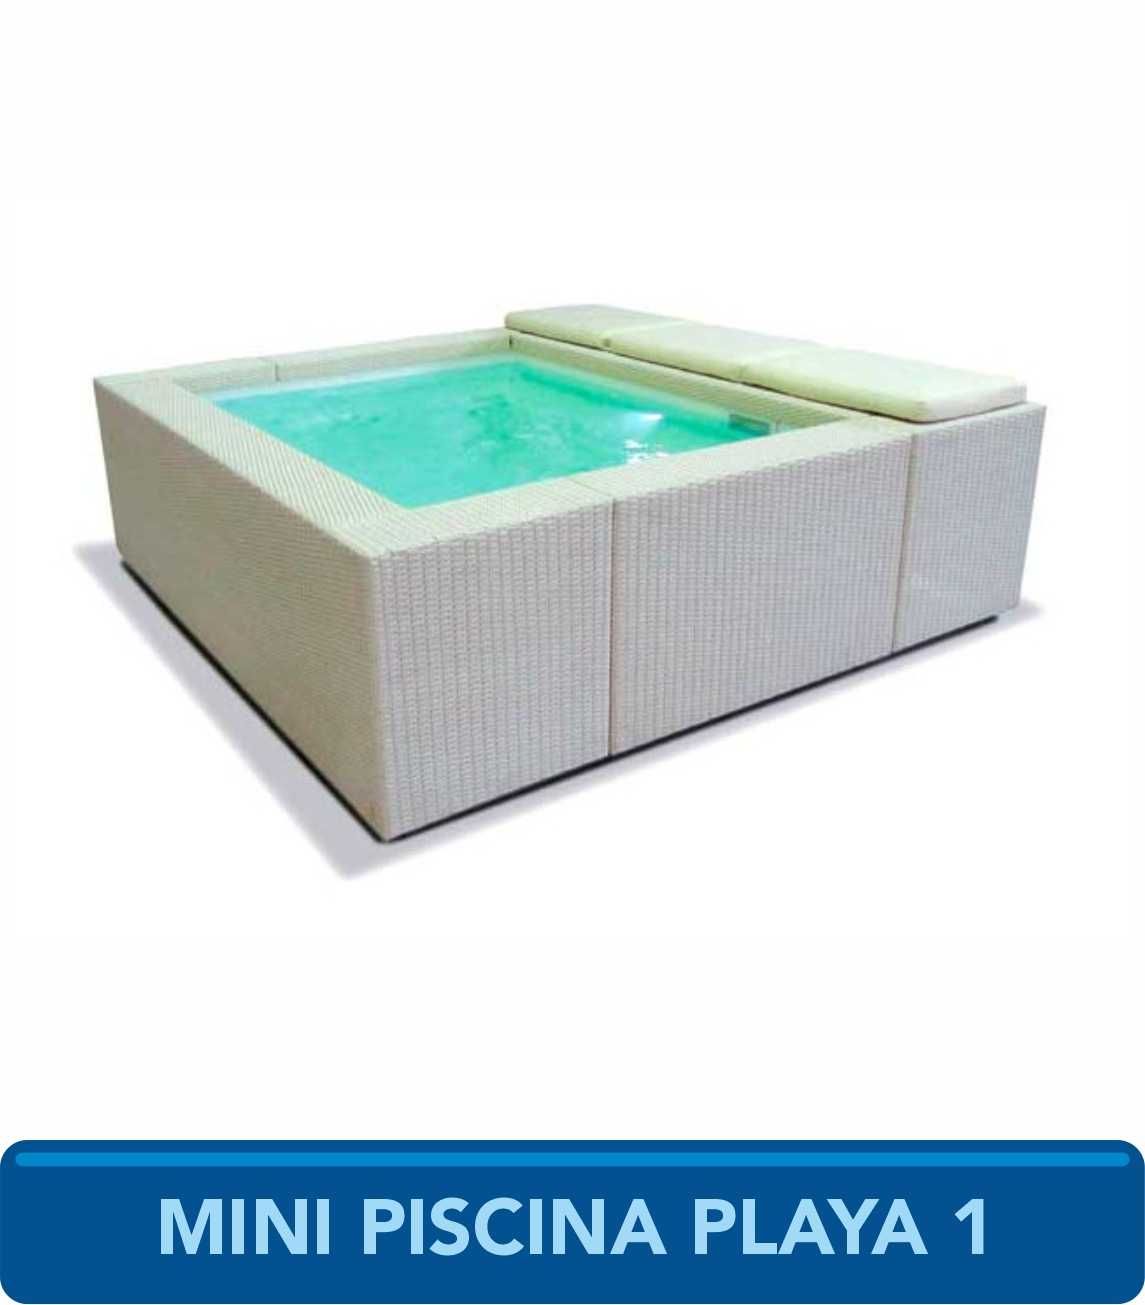 Mini Piscina Playa 1 com Hydro+Aquecimento